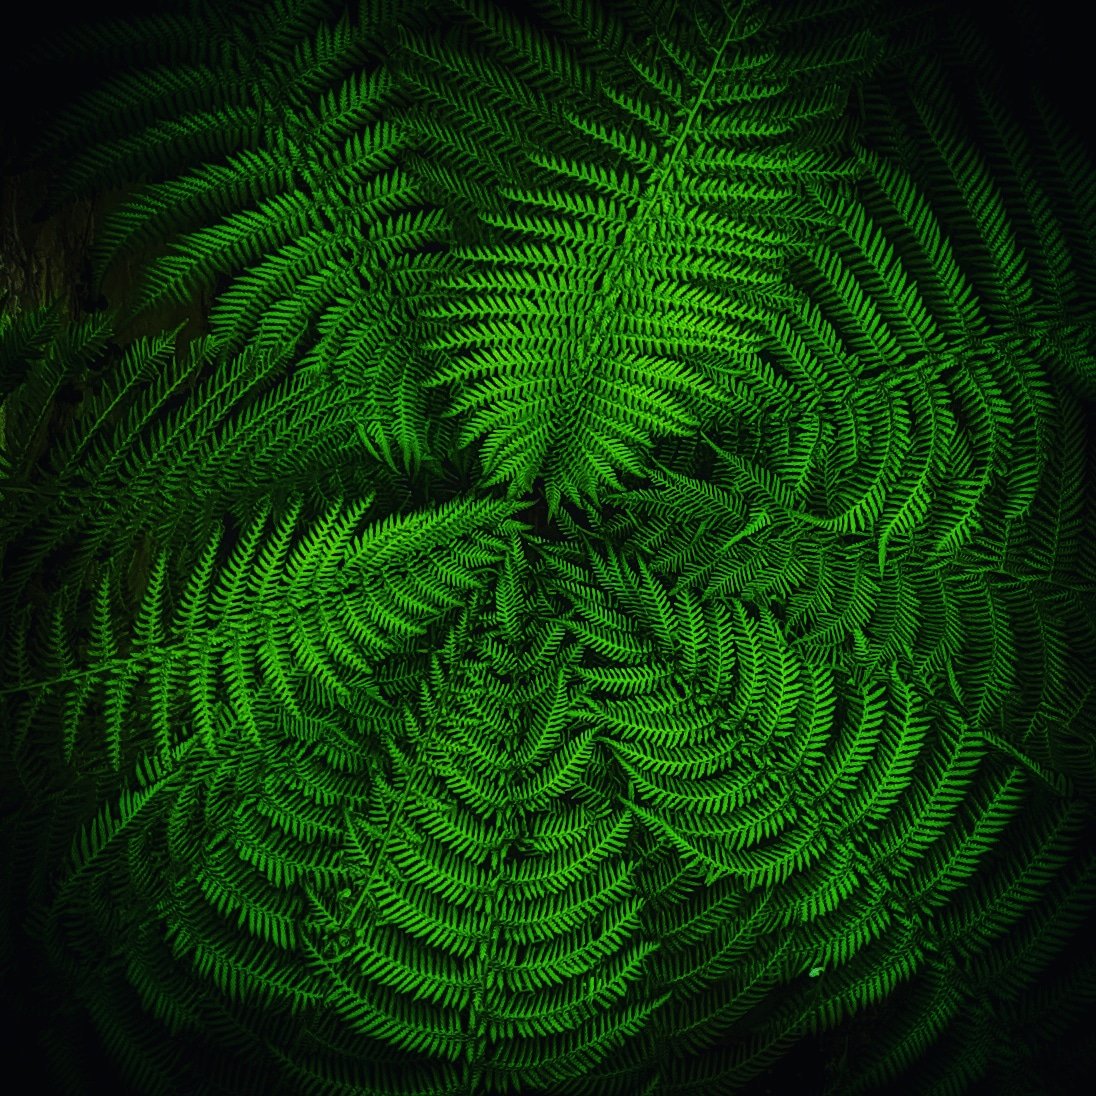 .
🌿Eye of the Fern 🌿
.
#fern #frond #fronds #natural #fractals #eye #centre #greenworld #leaf🍃 #lowlight #lowlightplants #seasonchange #aesthetics #samsung #snap #print